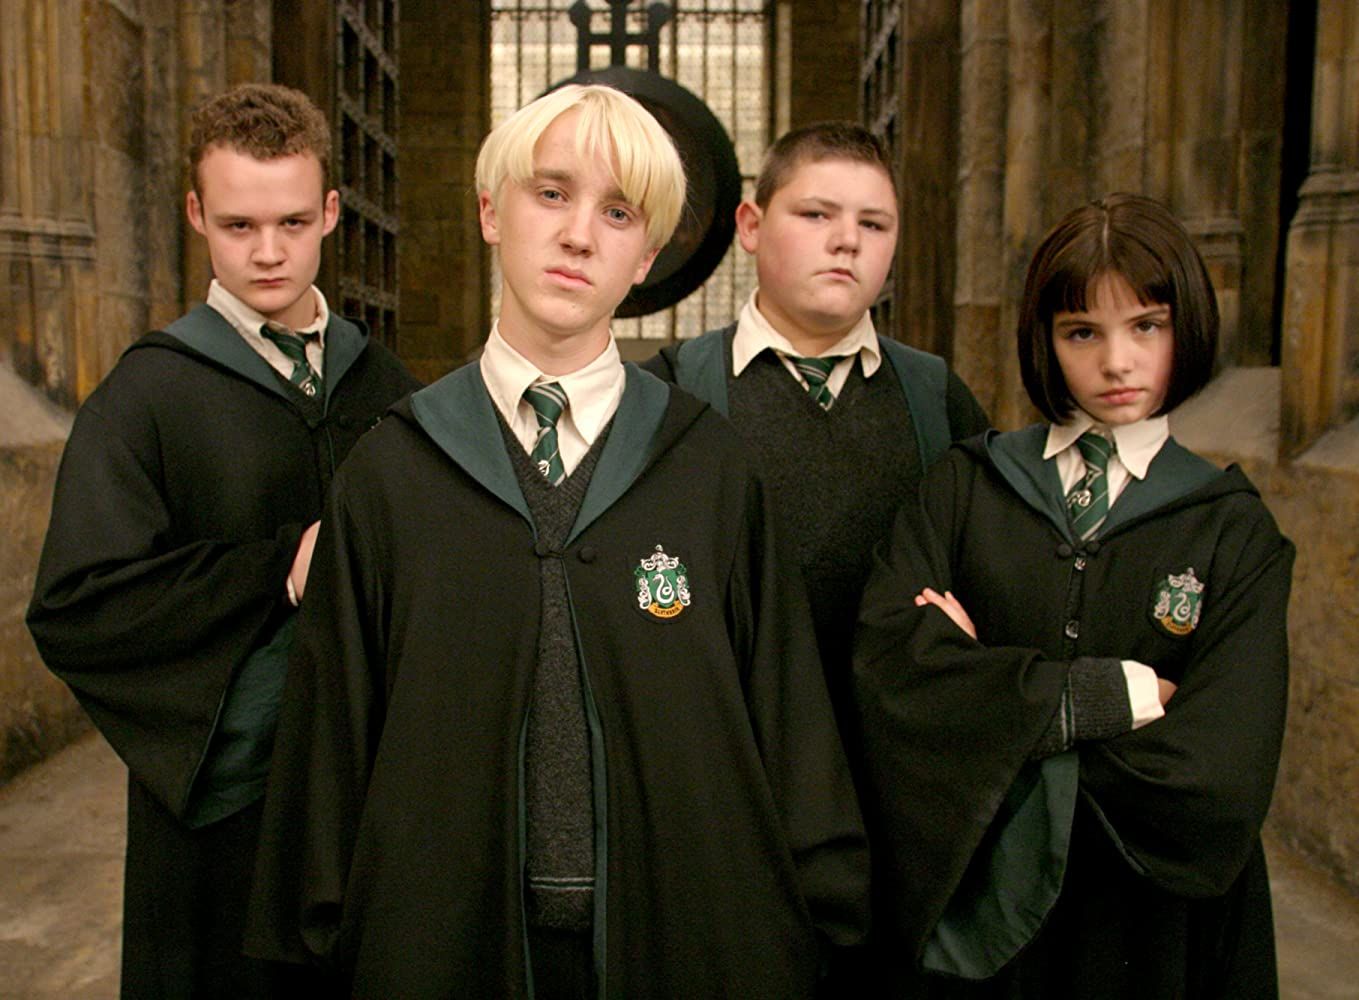 Tom Felton as Draco Malfoy with friends